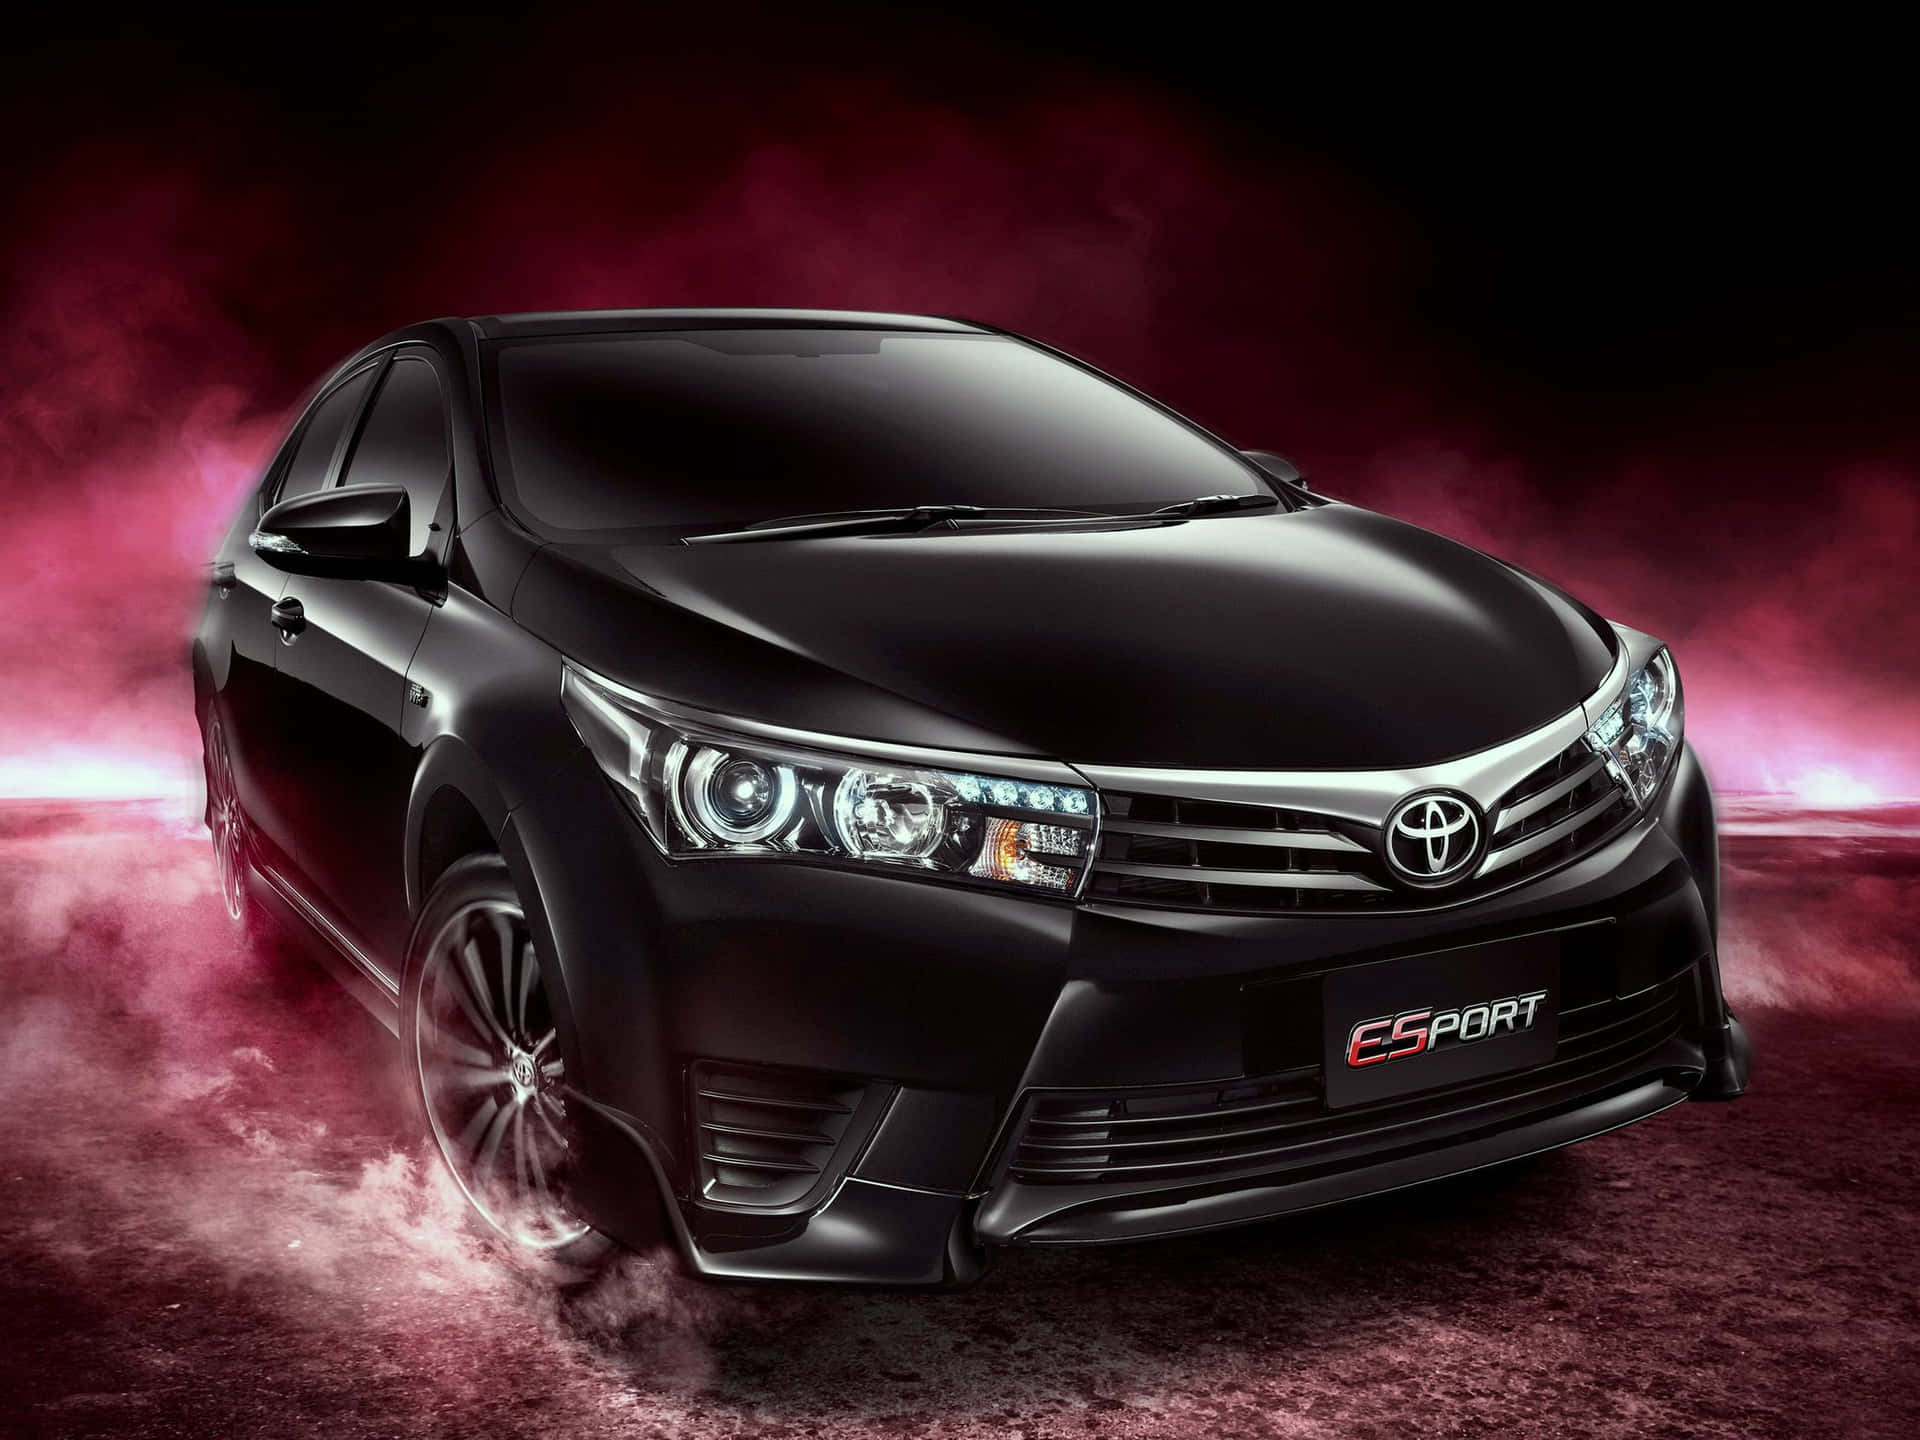 Sleek Black Toyota Corolla Ready For A Drive Wallpaper